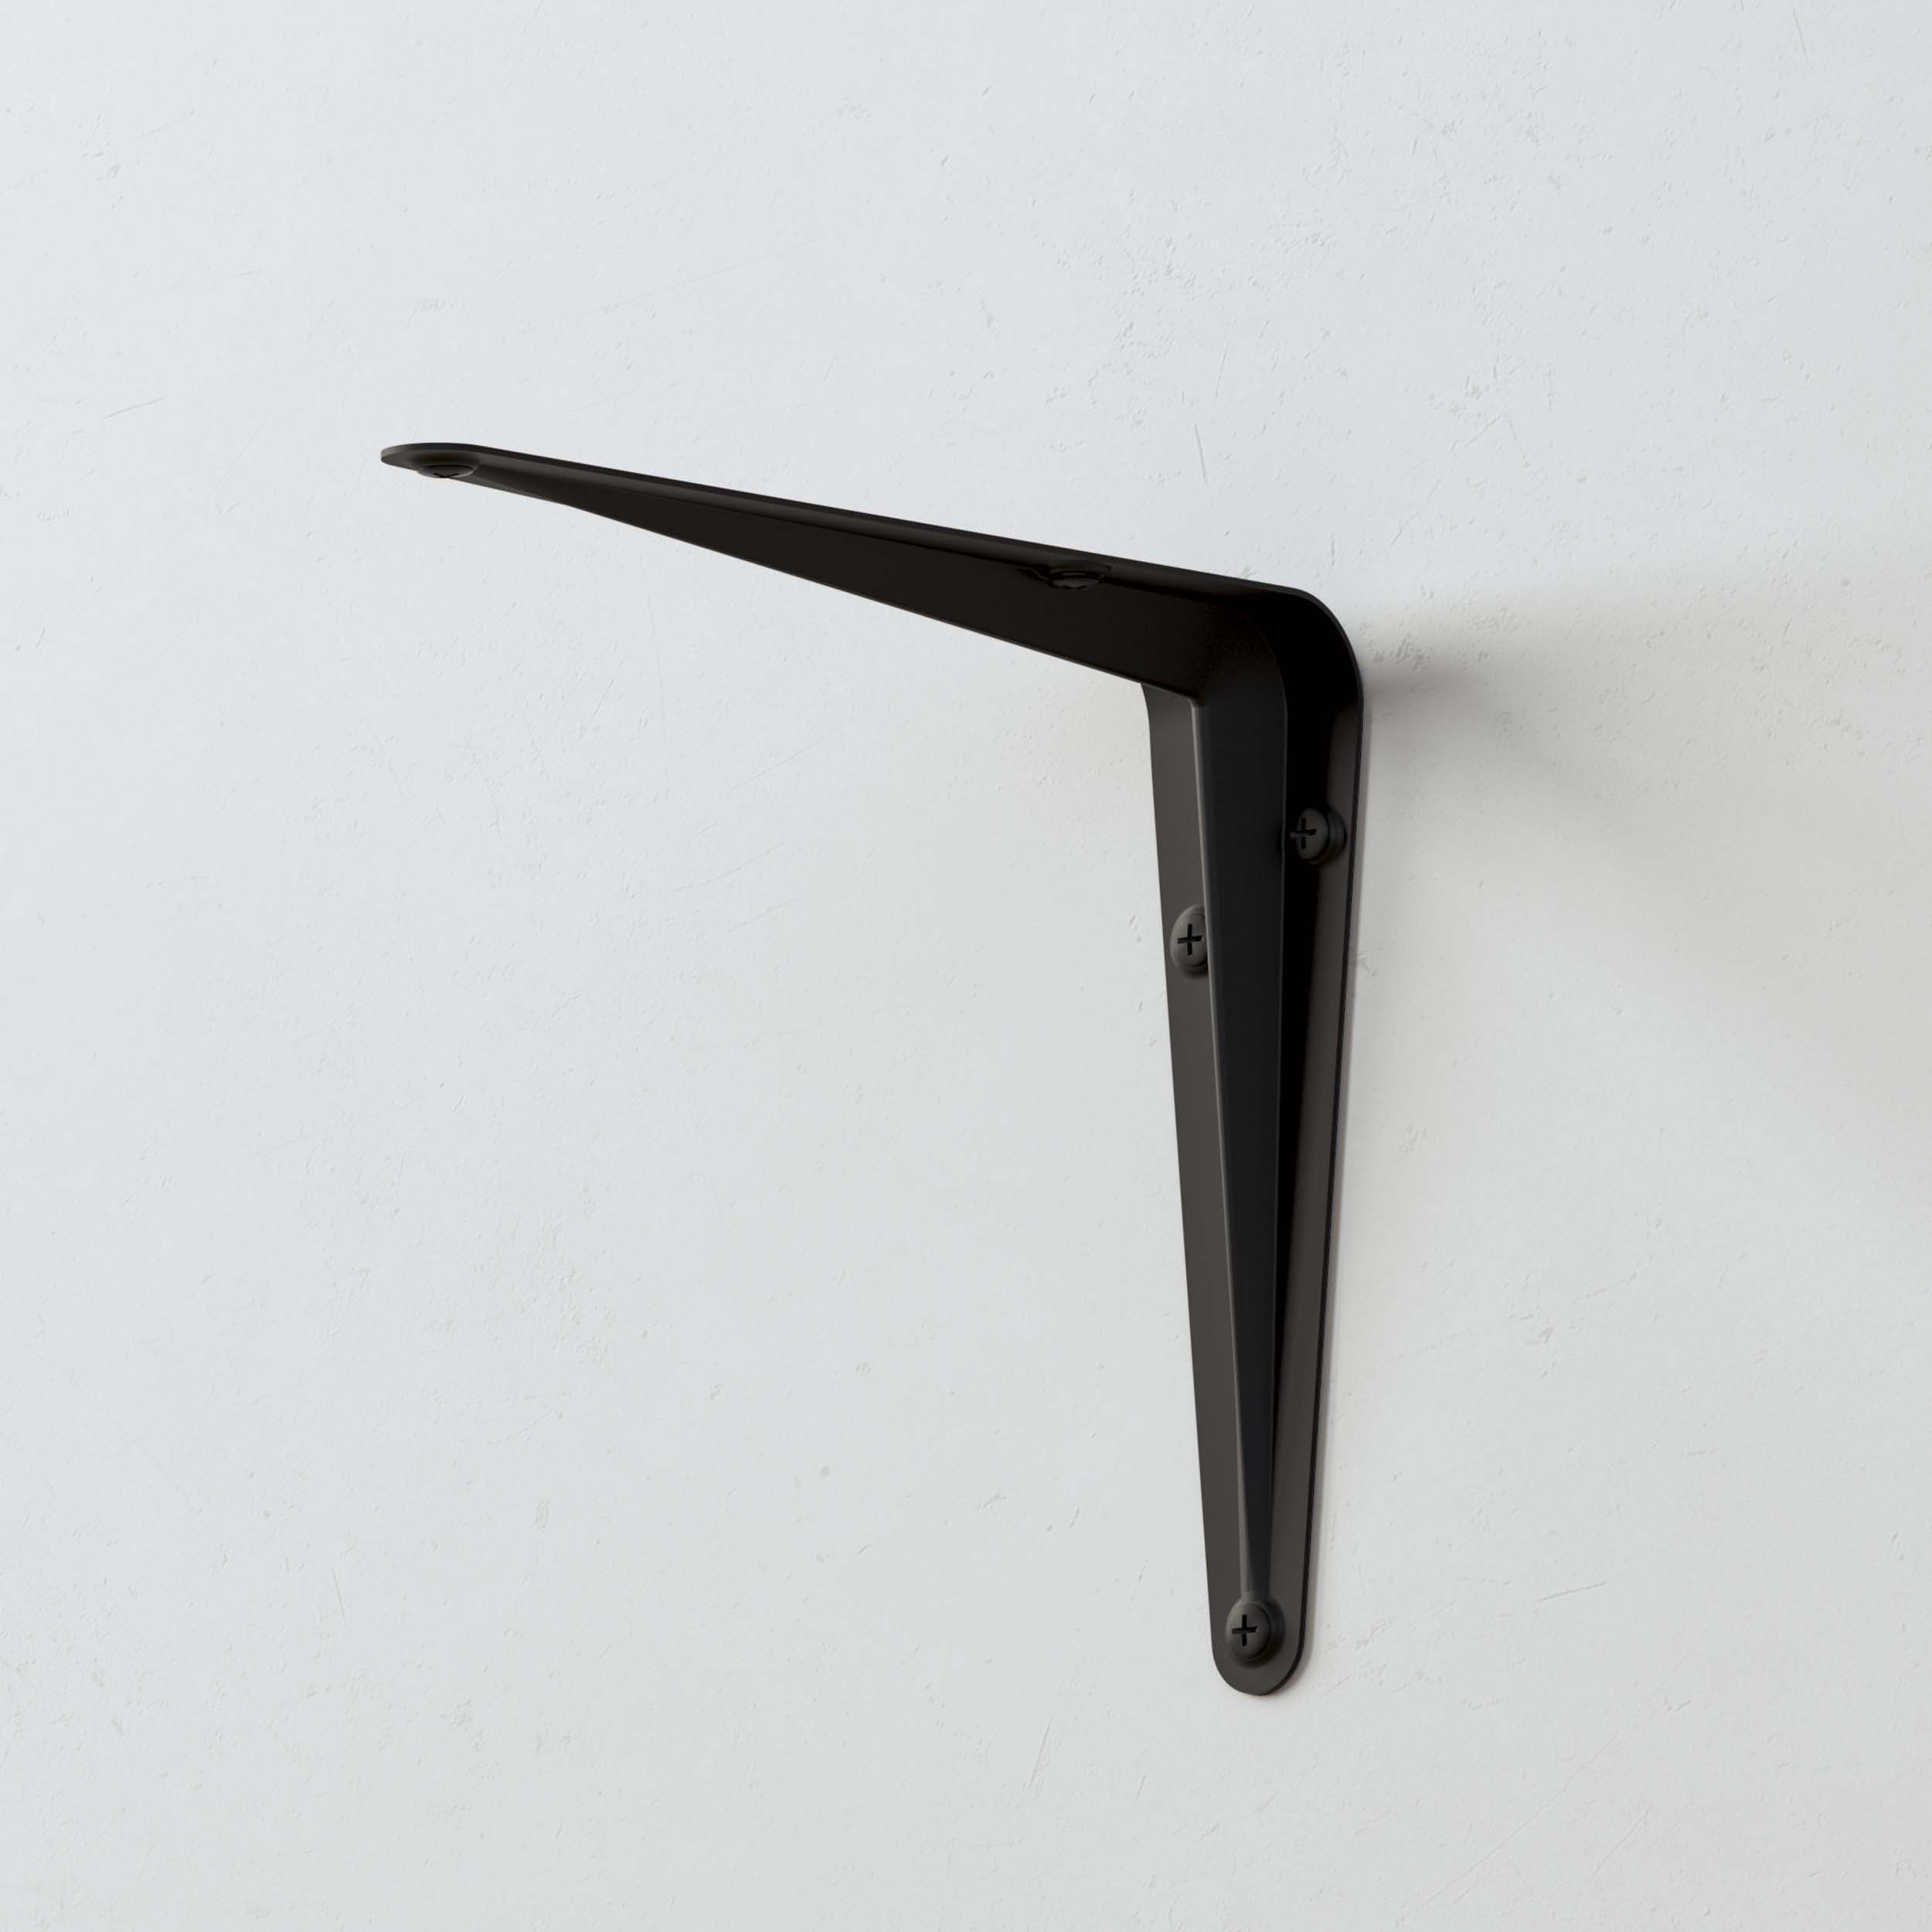 Durable black metal shelf bracket for reliable wall-mounted shelving.